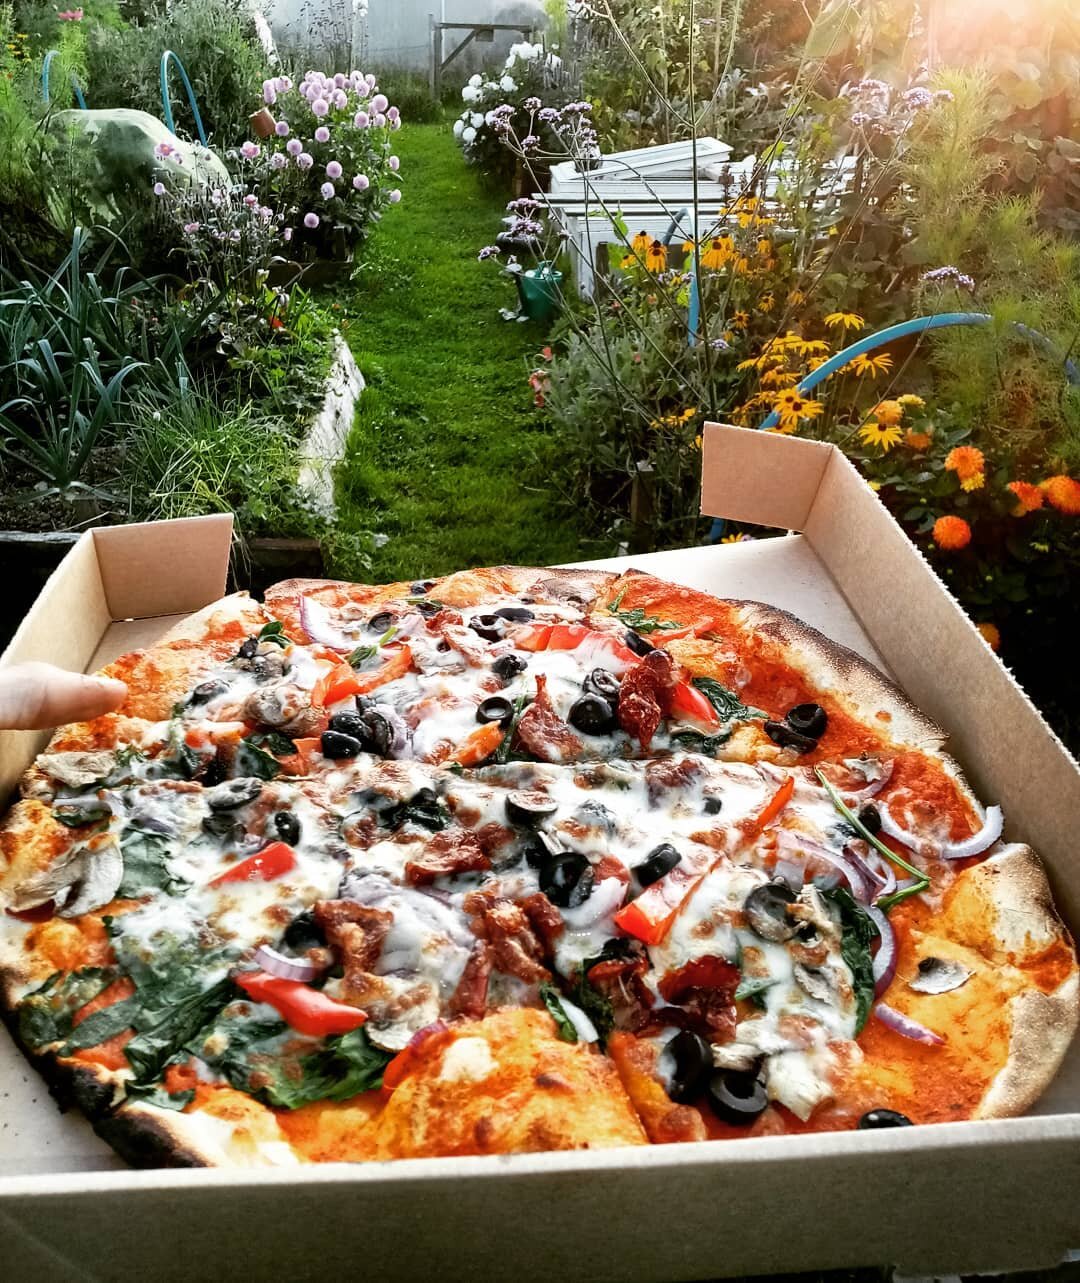 Finished work late so it's a pizza down the #allotment tonight. #gardening #summer #pizza #veg #vegetarian #freshdigsgardening #freshdigs